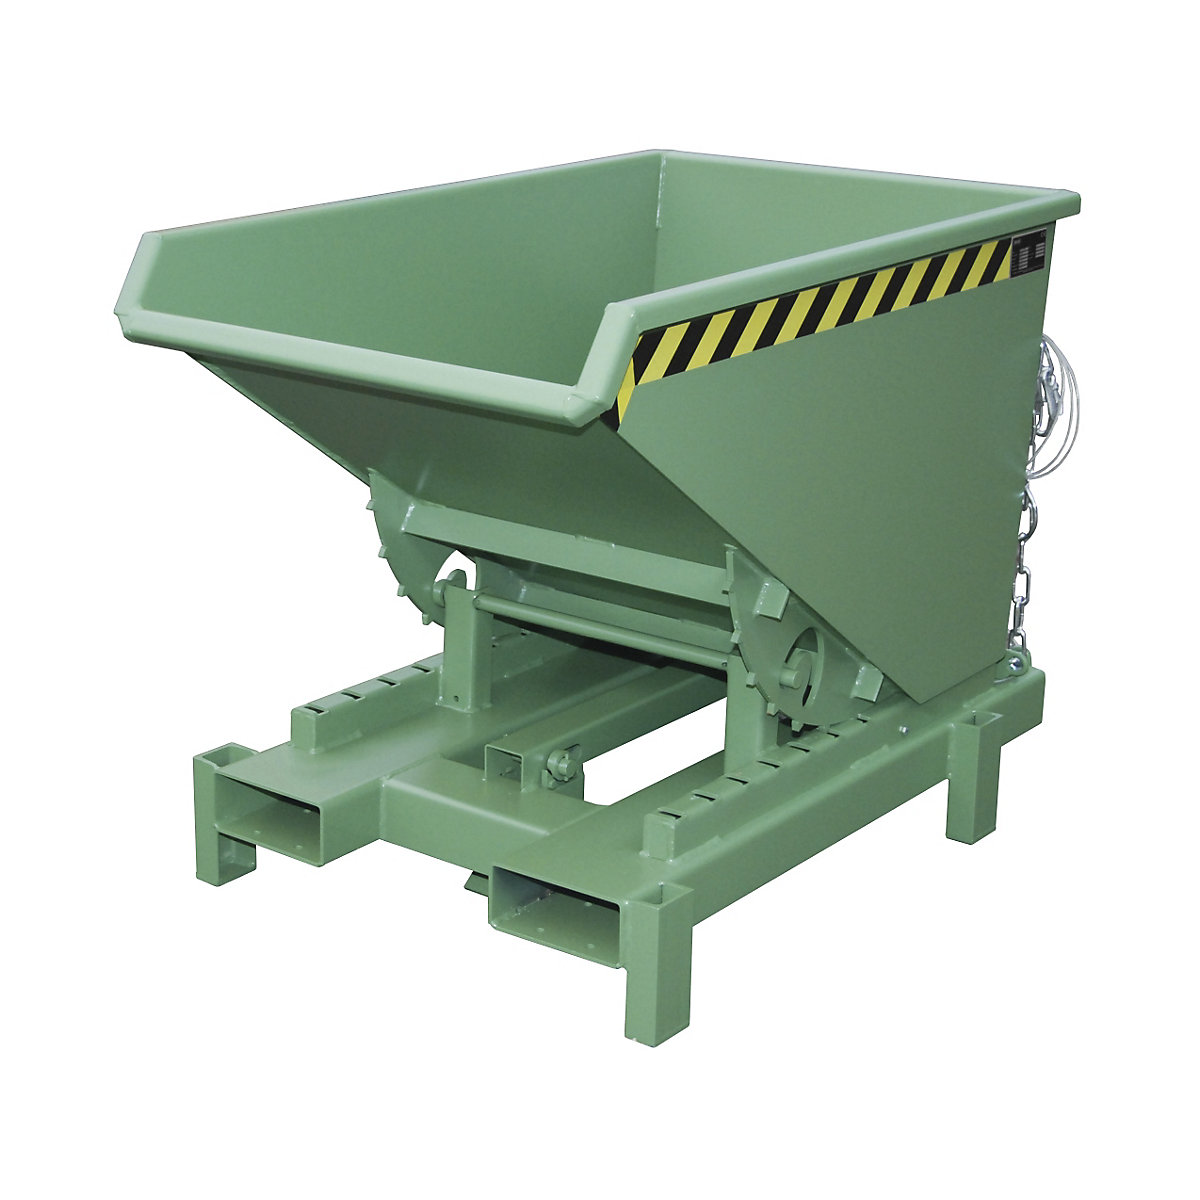 Heavy duty tilting skip – eurokraft pro, capacity 0.6 m³, max. load 4000 kg, green RAL 6011